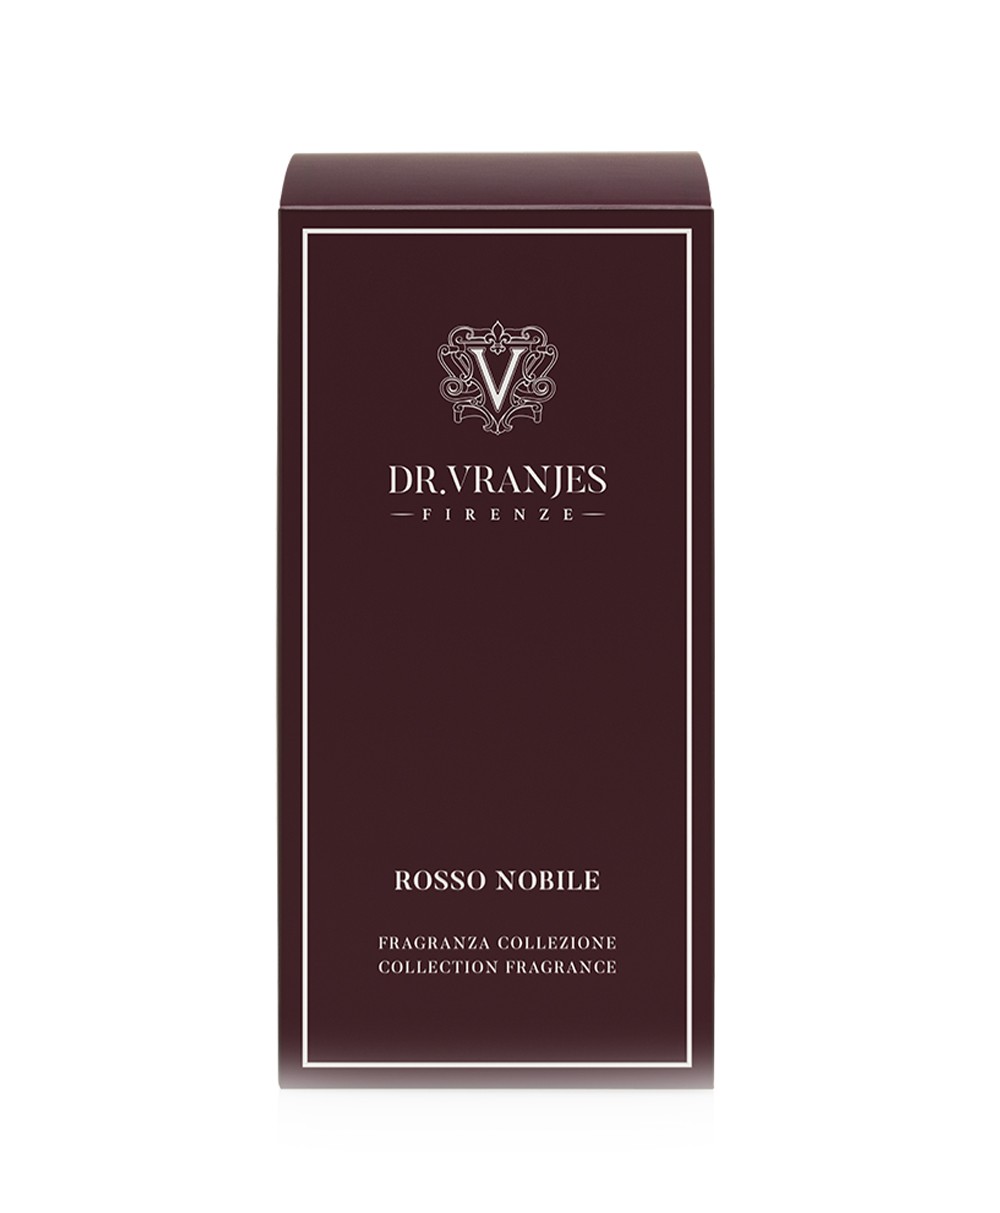 Rosso Nobile Diffuser Verpackung aus der Classic Fragrance Collection von Dr. Vranjes Firenze im RAUM Conceptstore